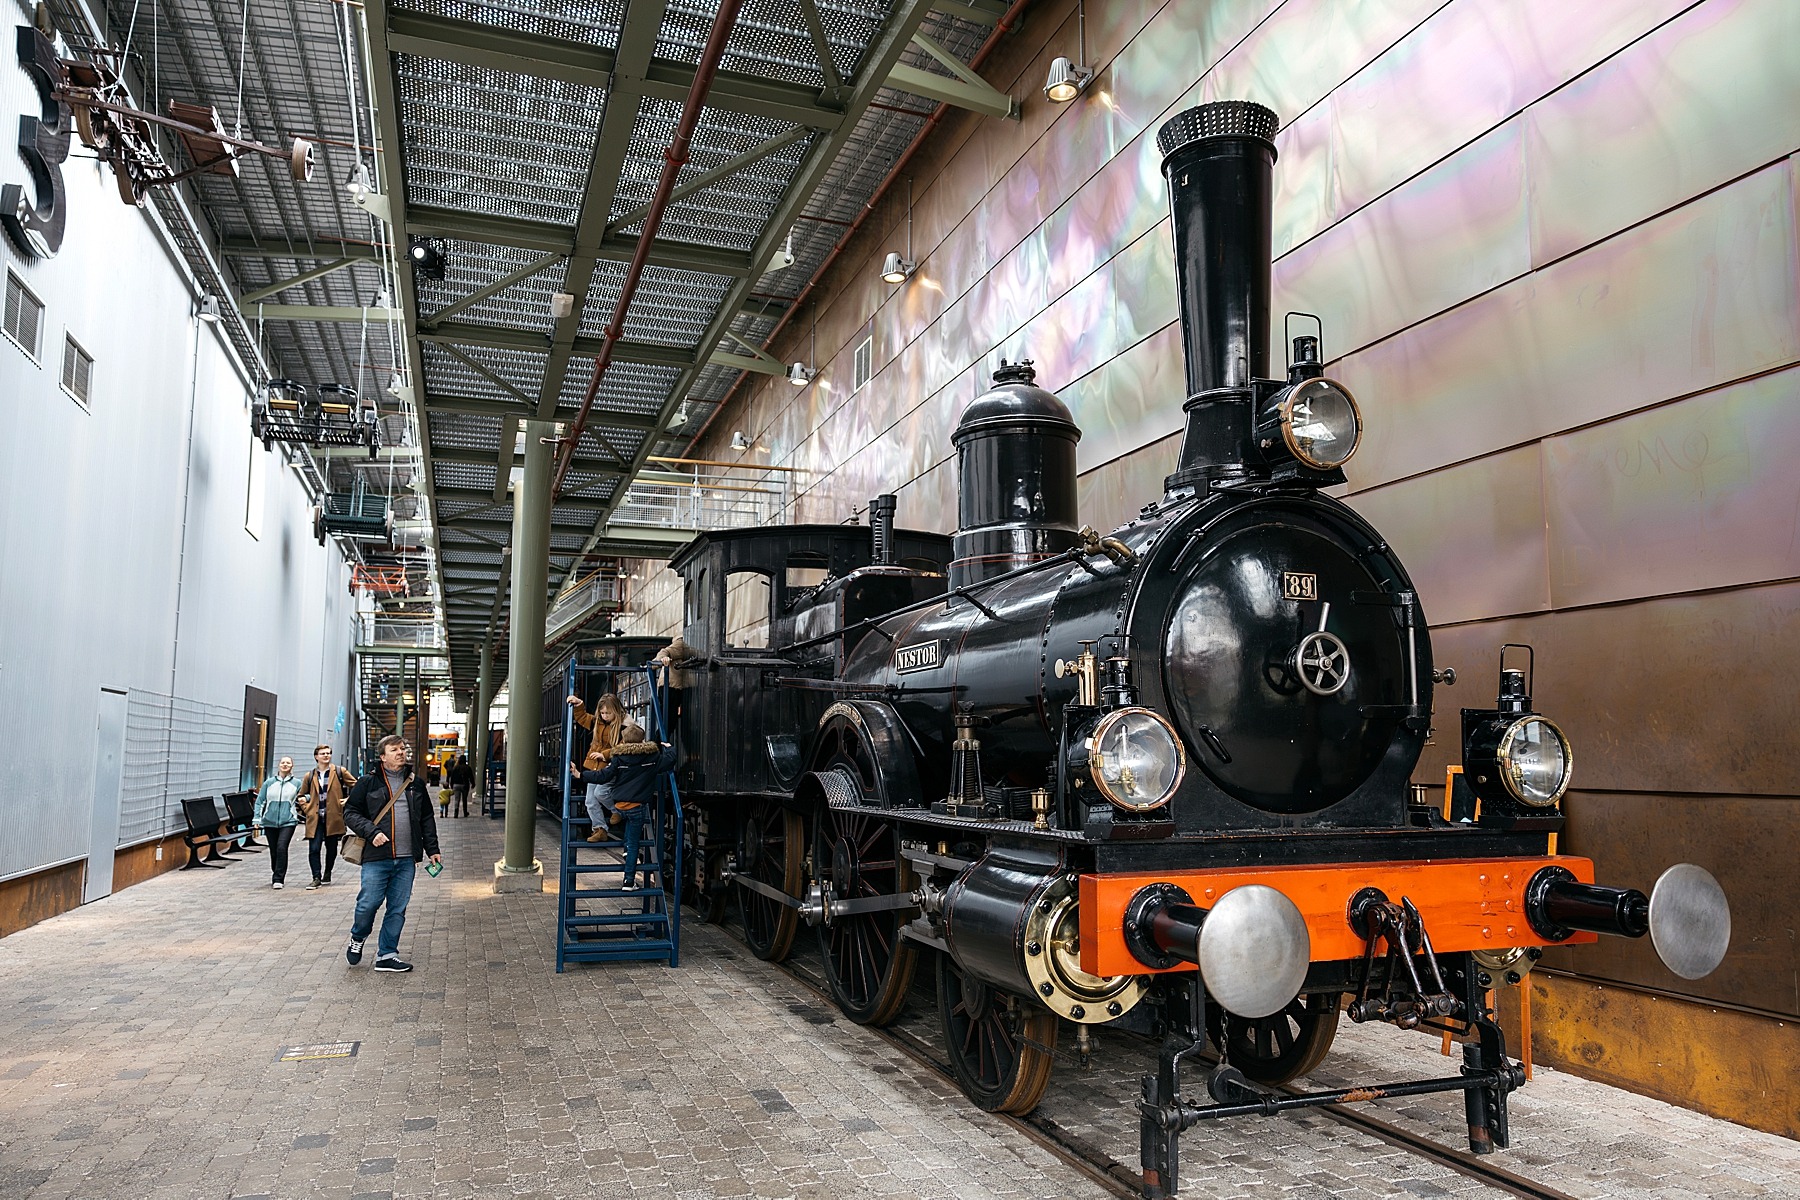 Spoorwegmuseum, l'incroyable musée du train de Utrecht 78